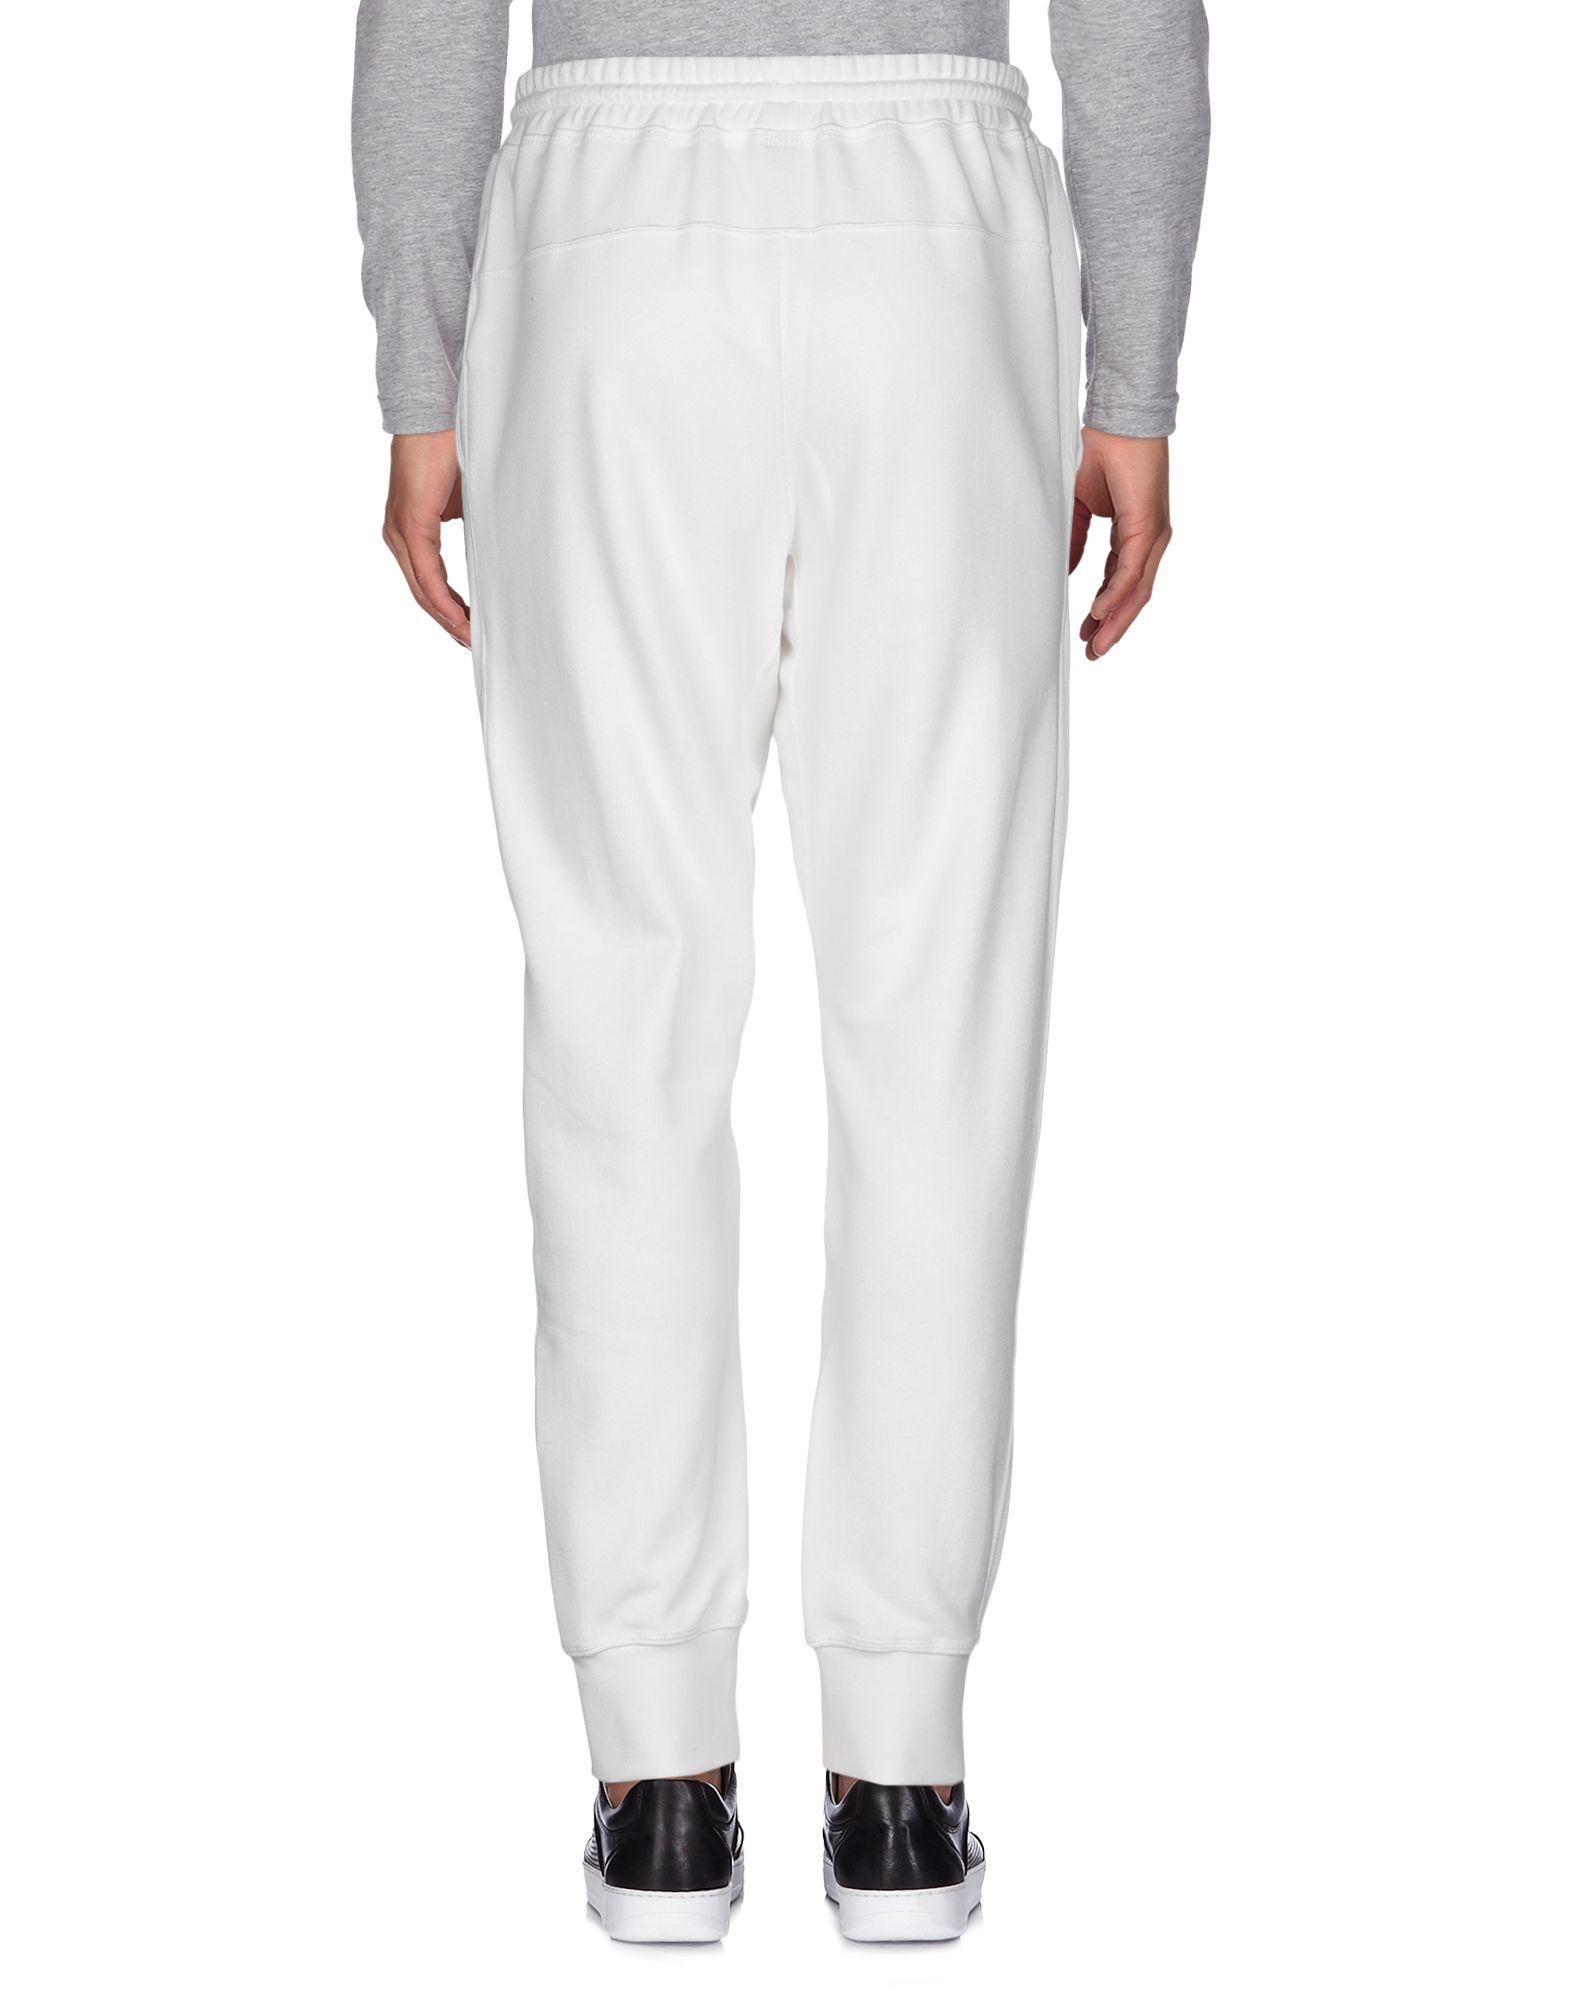 adidas Originals Fleece Casual Pants in White for Men - Lyst